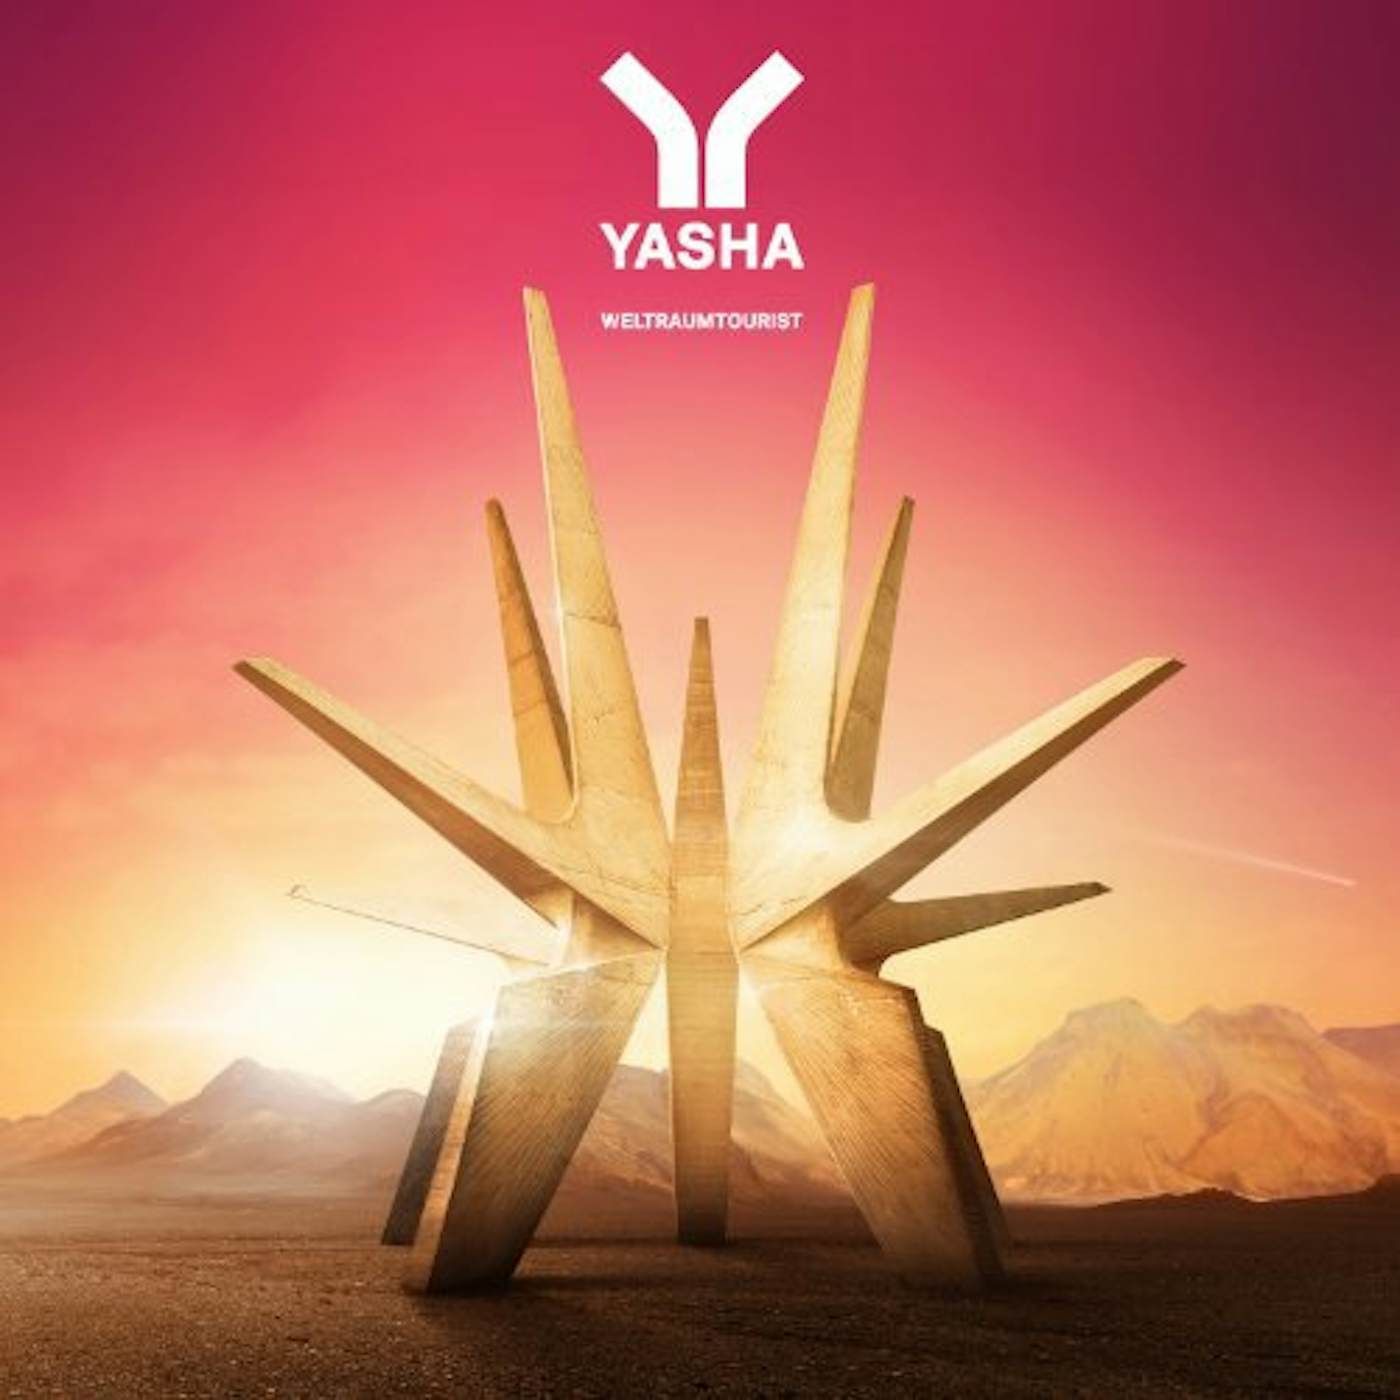 Yasha Weltraumtourist Vinyl Record